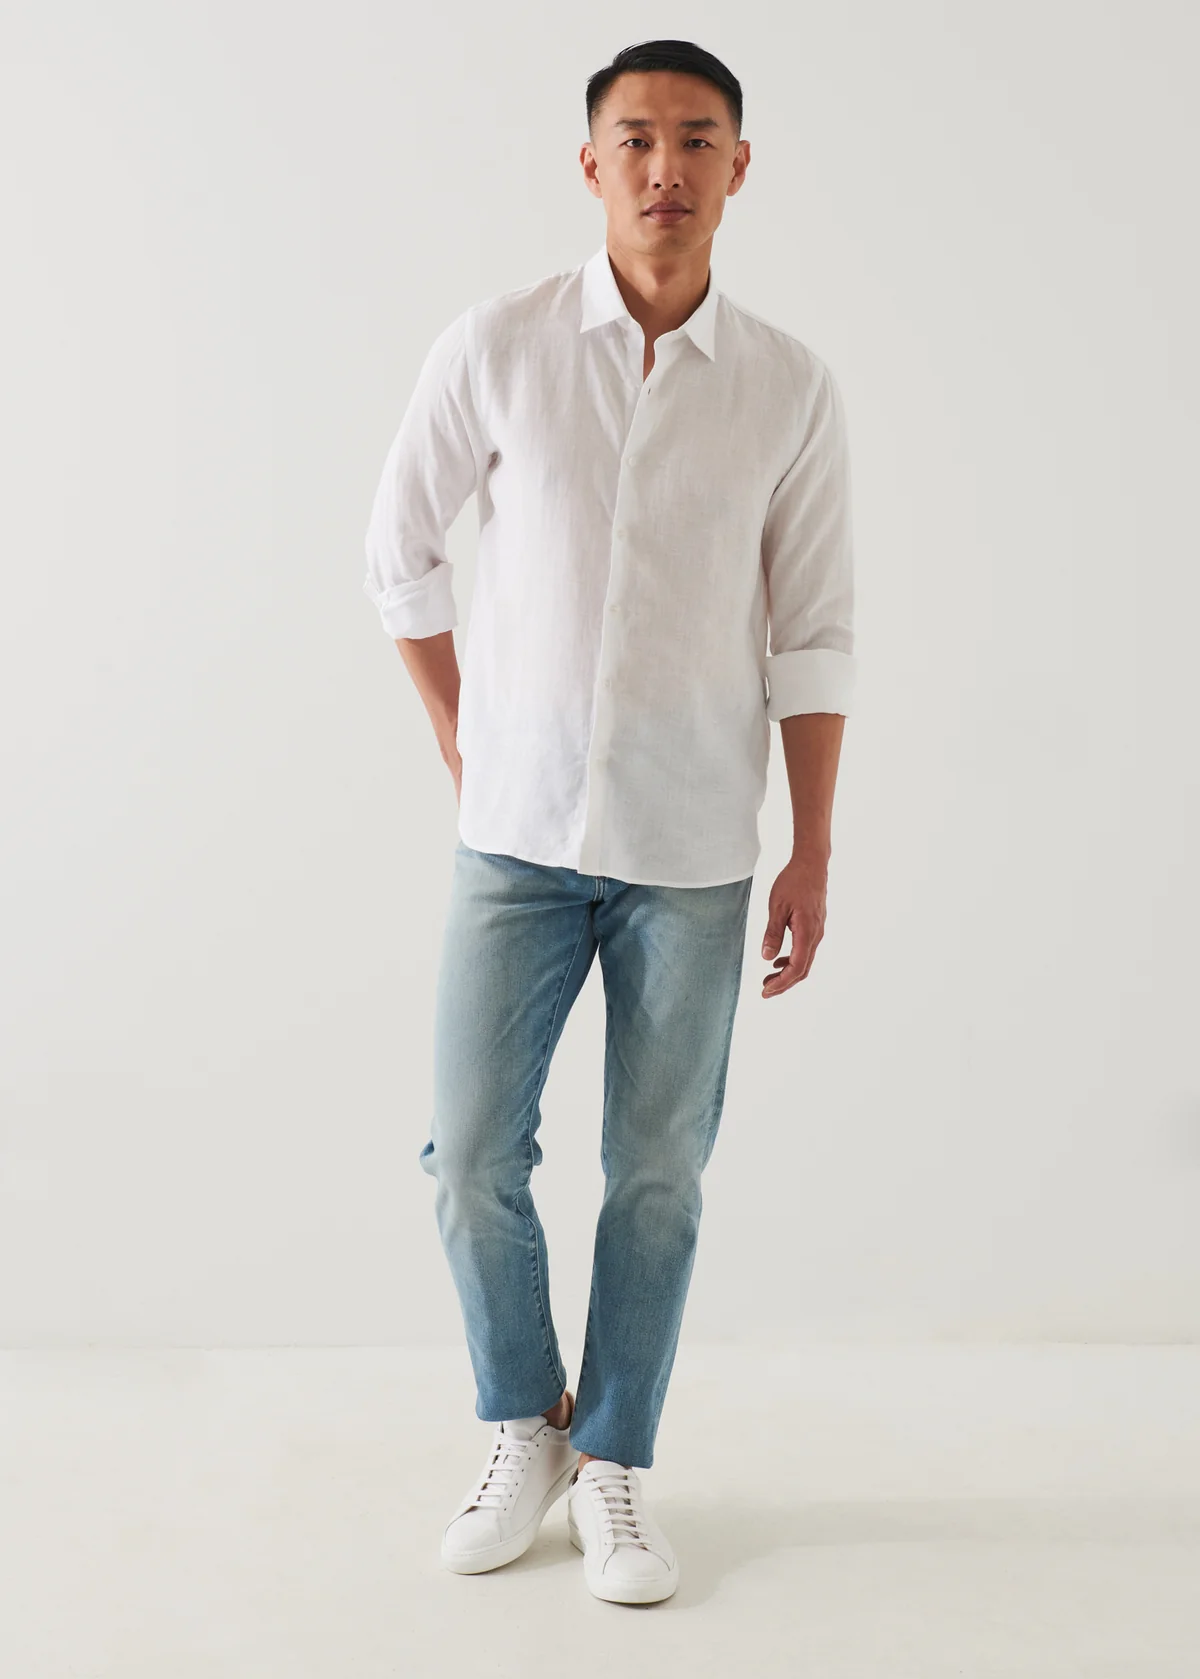 Linen Chambray Shirt - White - Patrick Assaraf - Canada - Danali